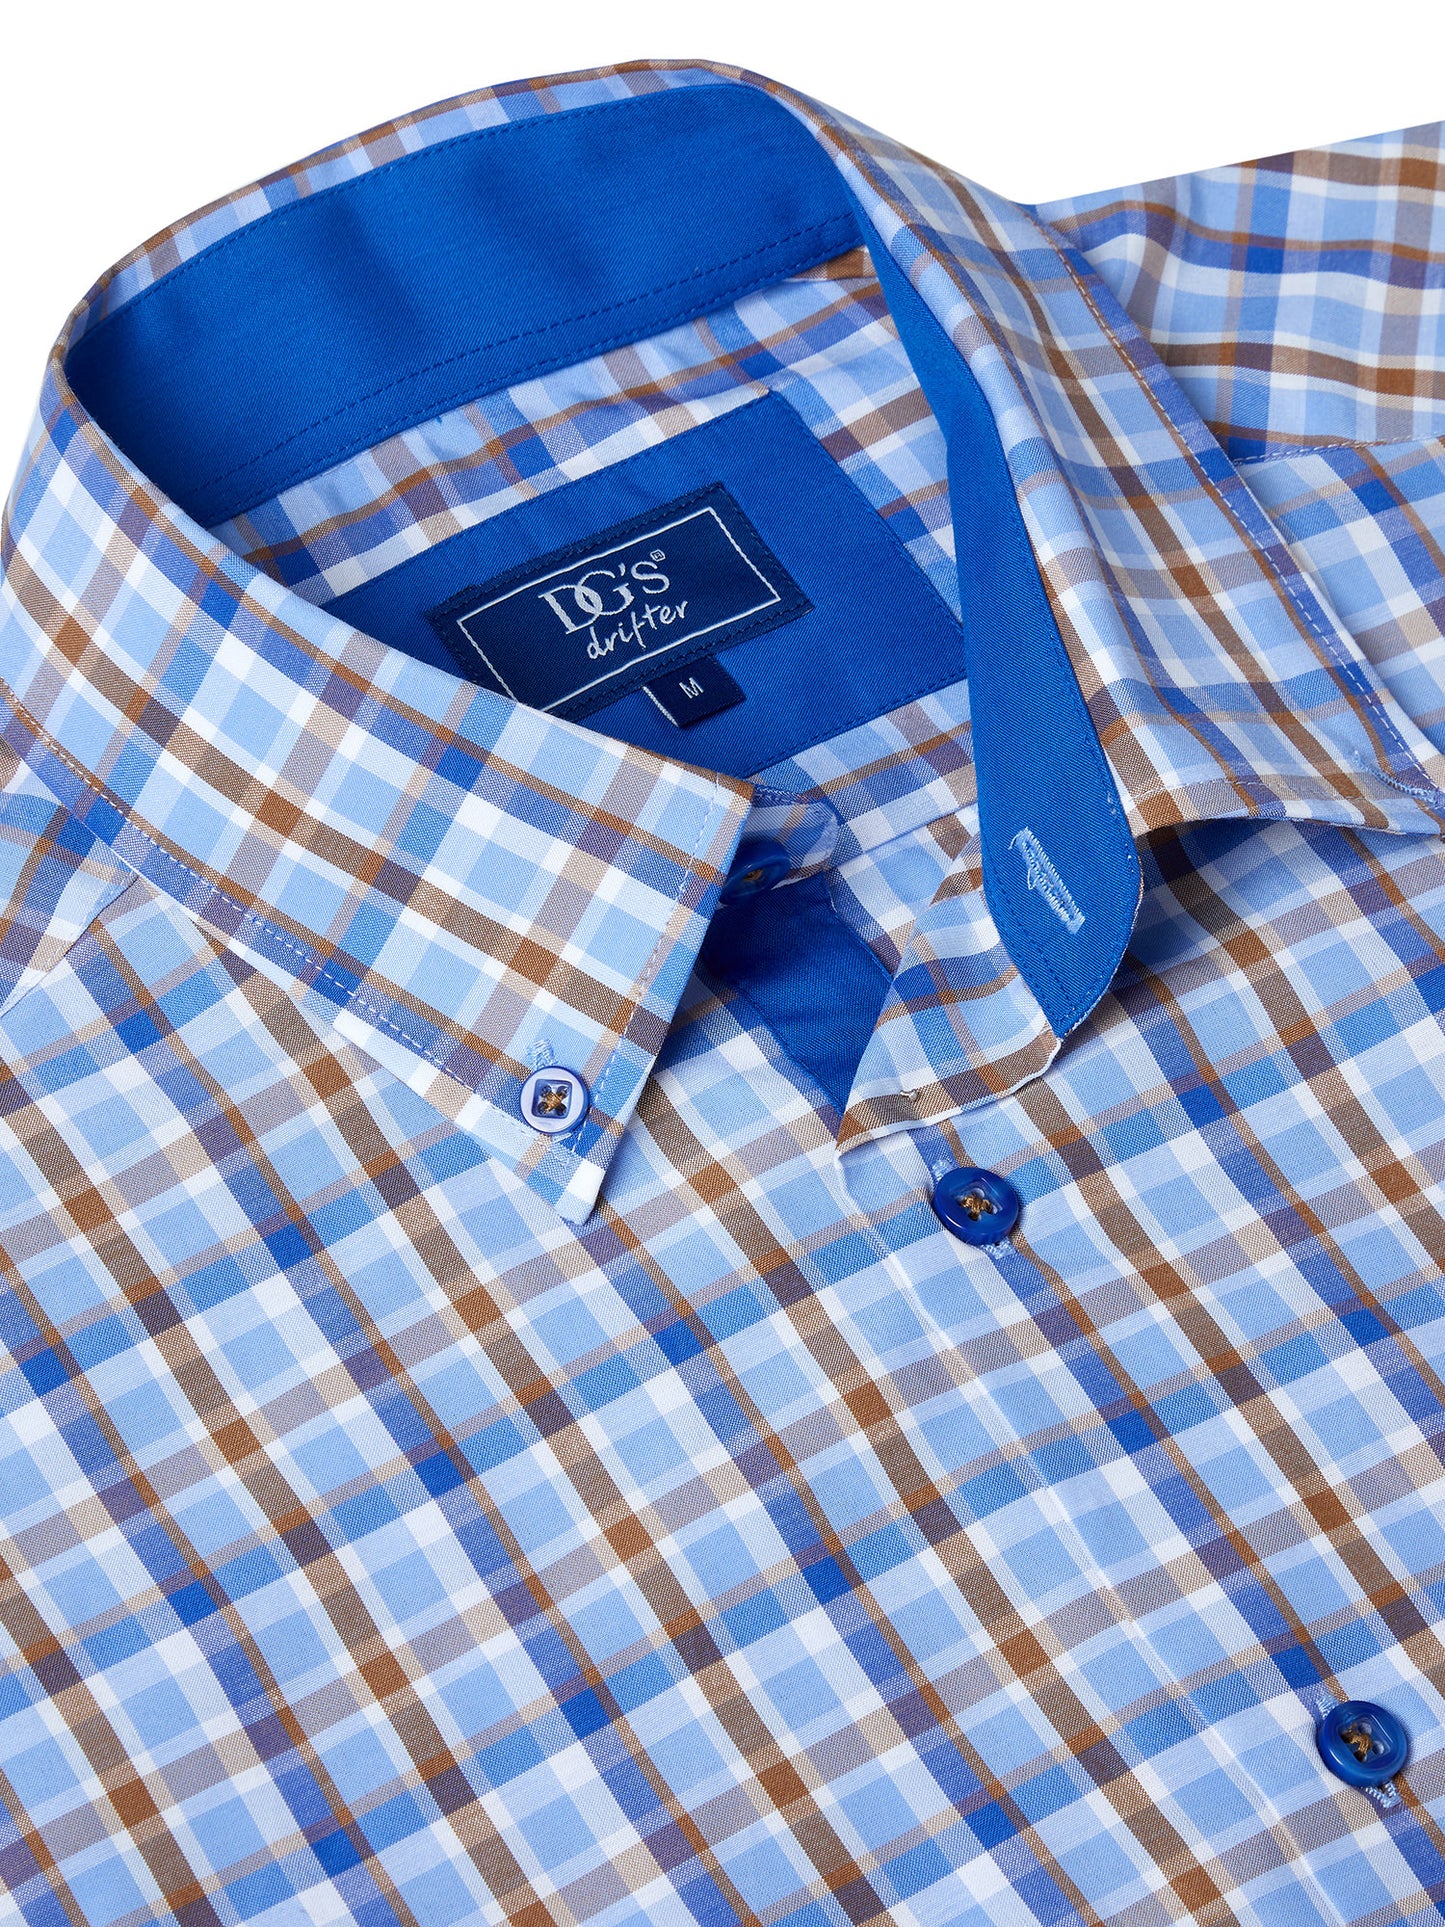 Cotton-Blend Button-Down Short-Sleeve Shirt - Blue / Tan Check